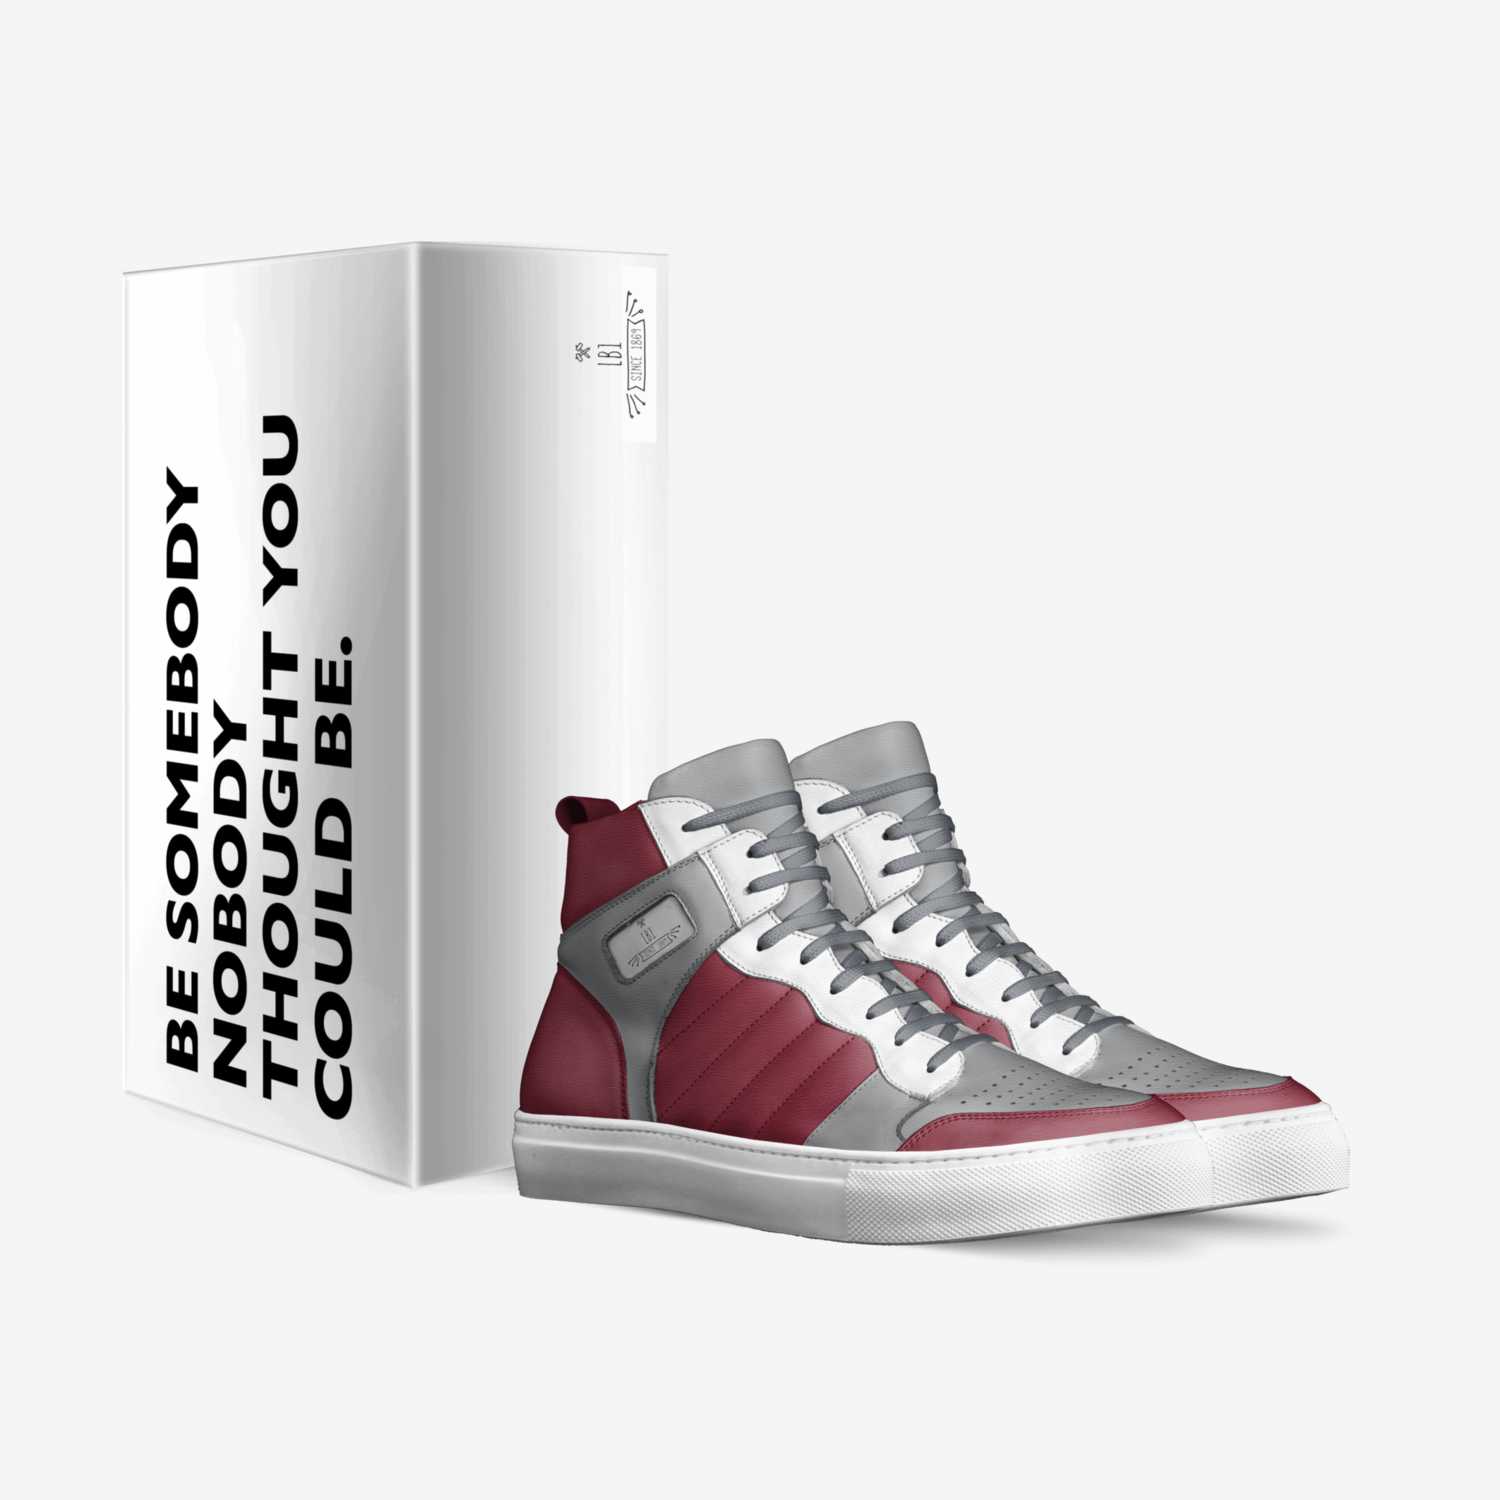 LB1 custom made in Italy shoes by Leonardo Scott | Box view